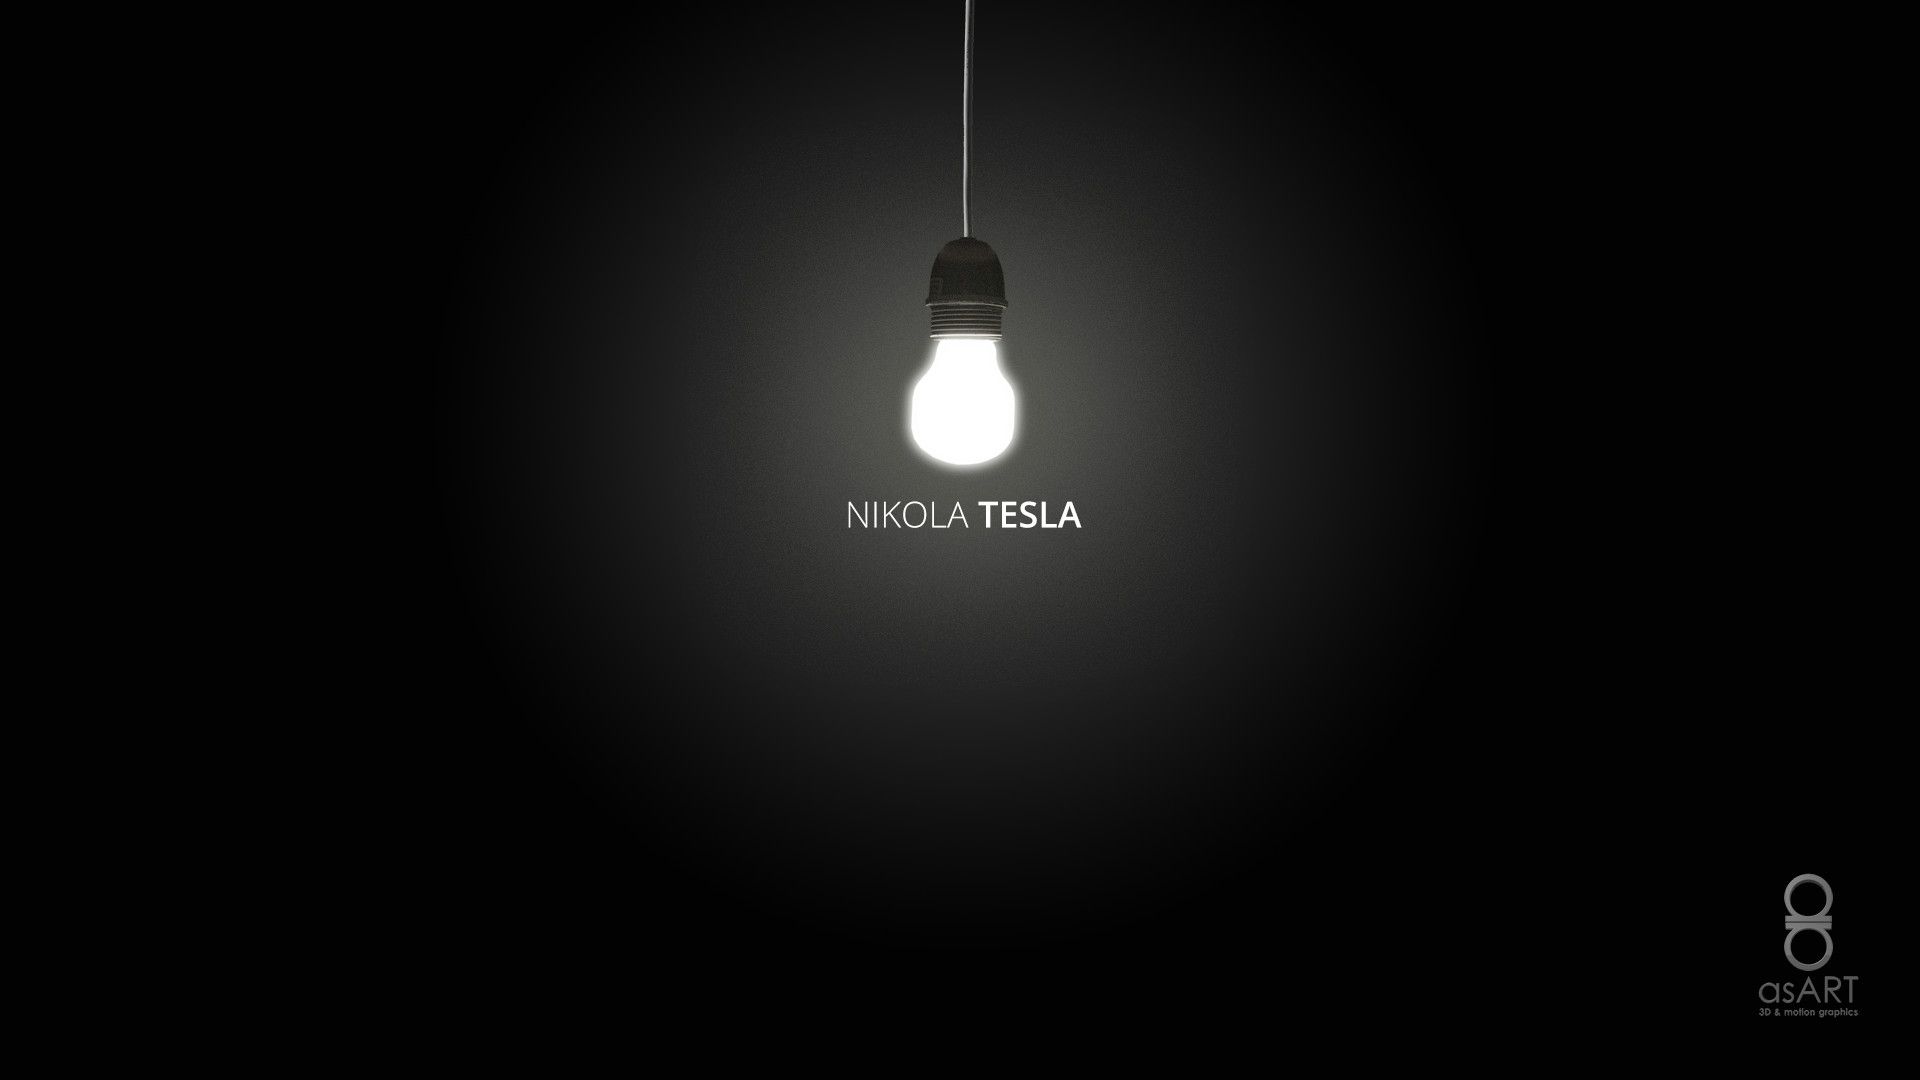 Nikola Tesla Wallpaper HD Android iPhone